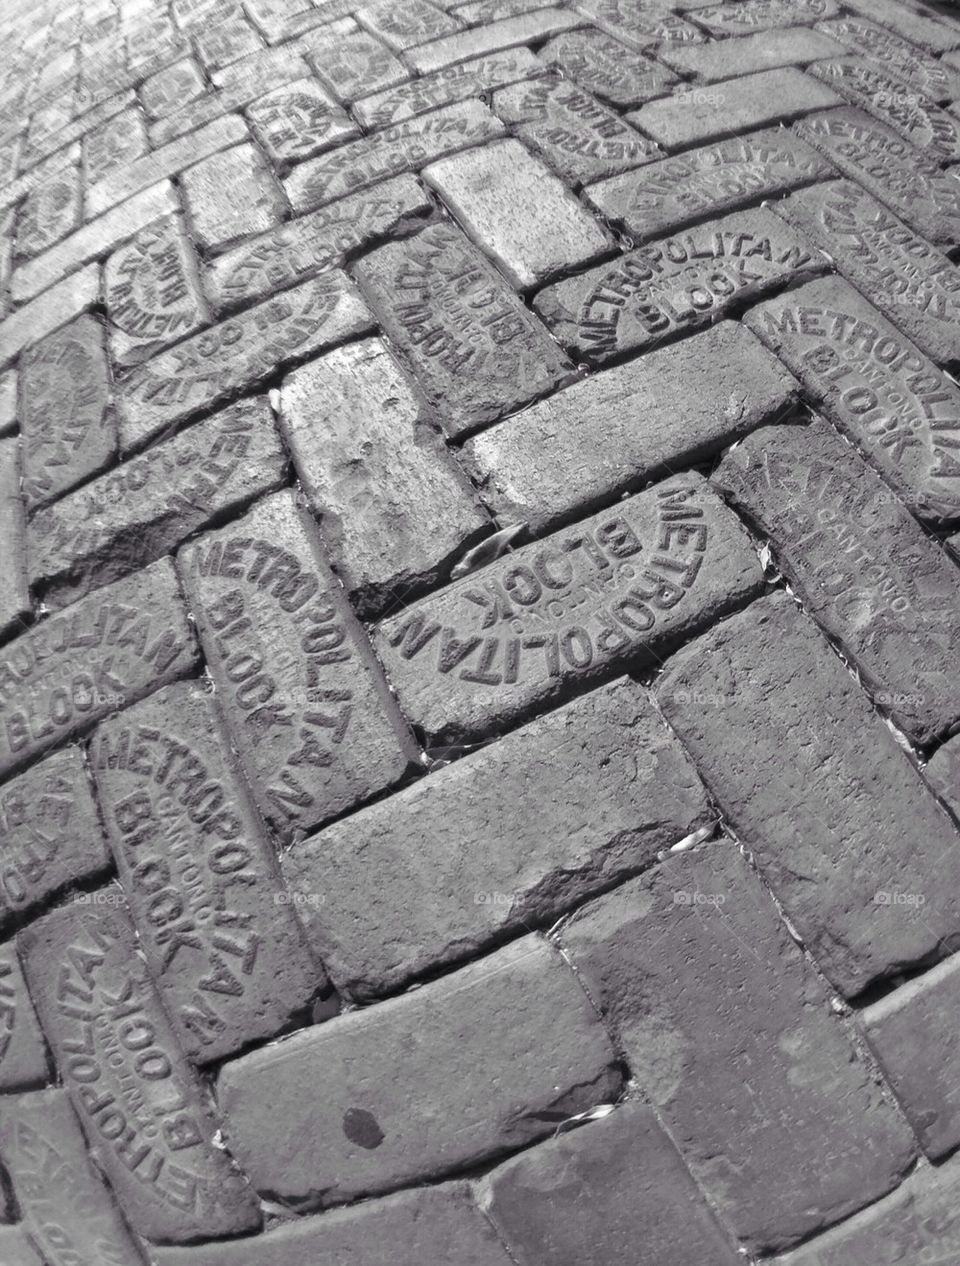 Brick sidewalk